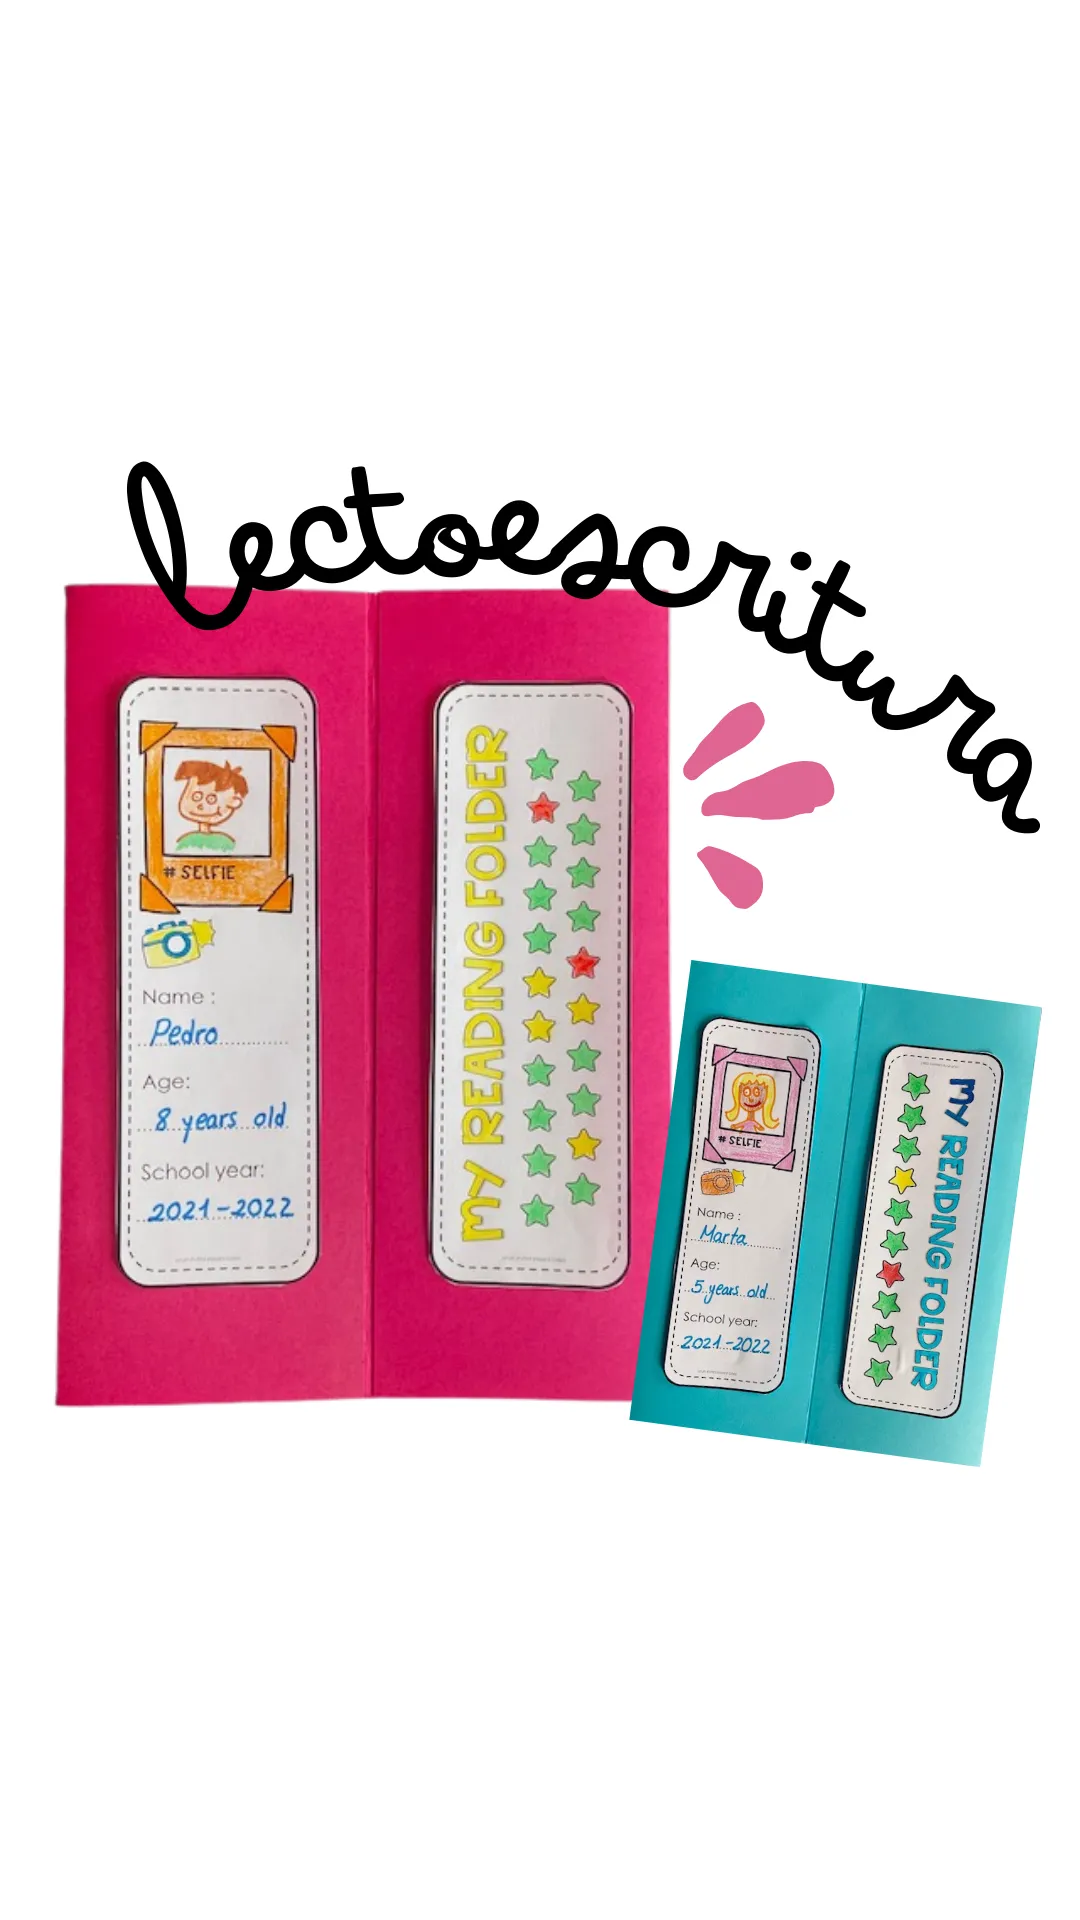 Carpeta de Lectoescritura - Reading Folder Cover (English and Spanish)